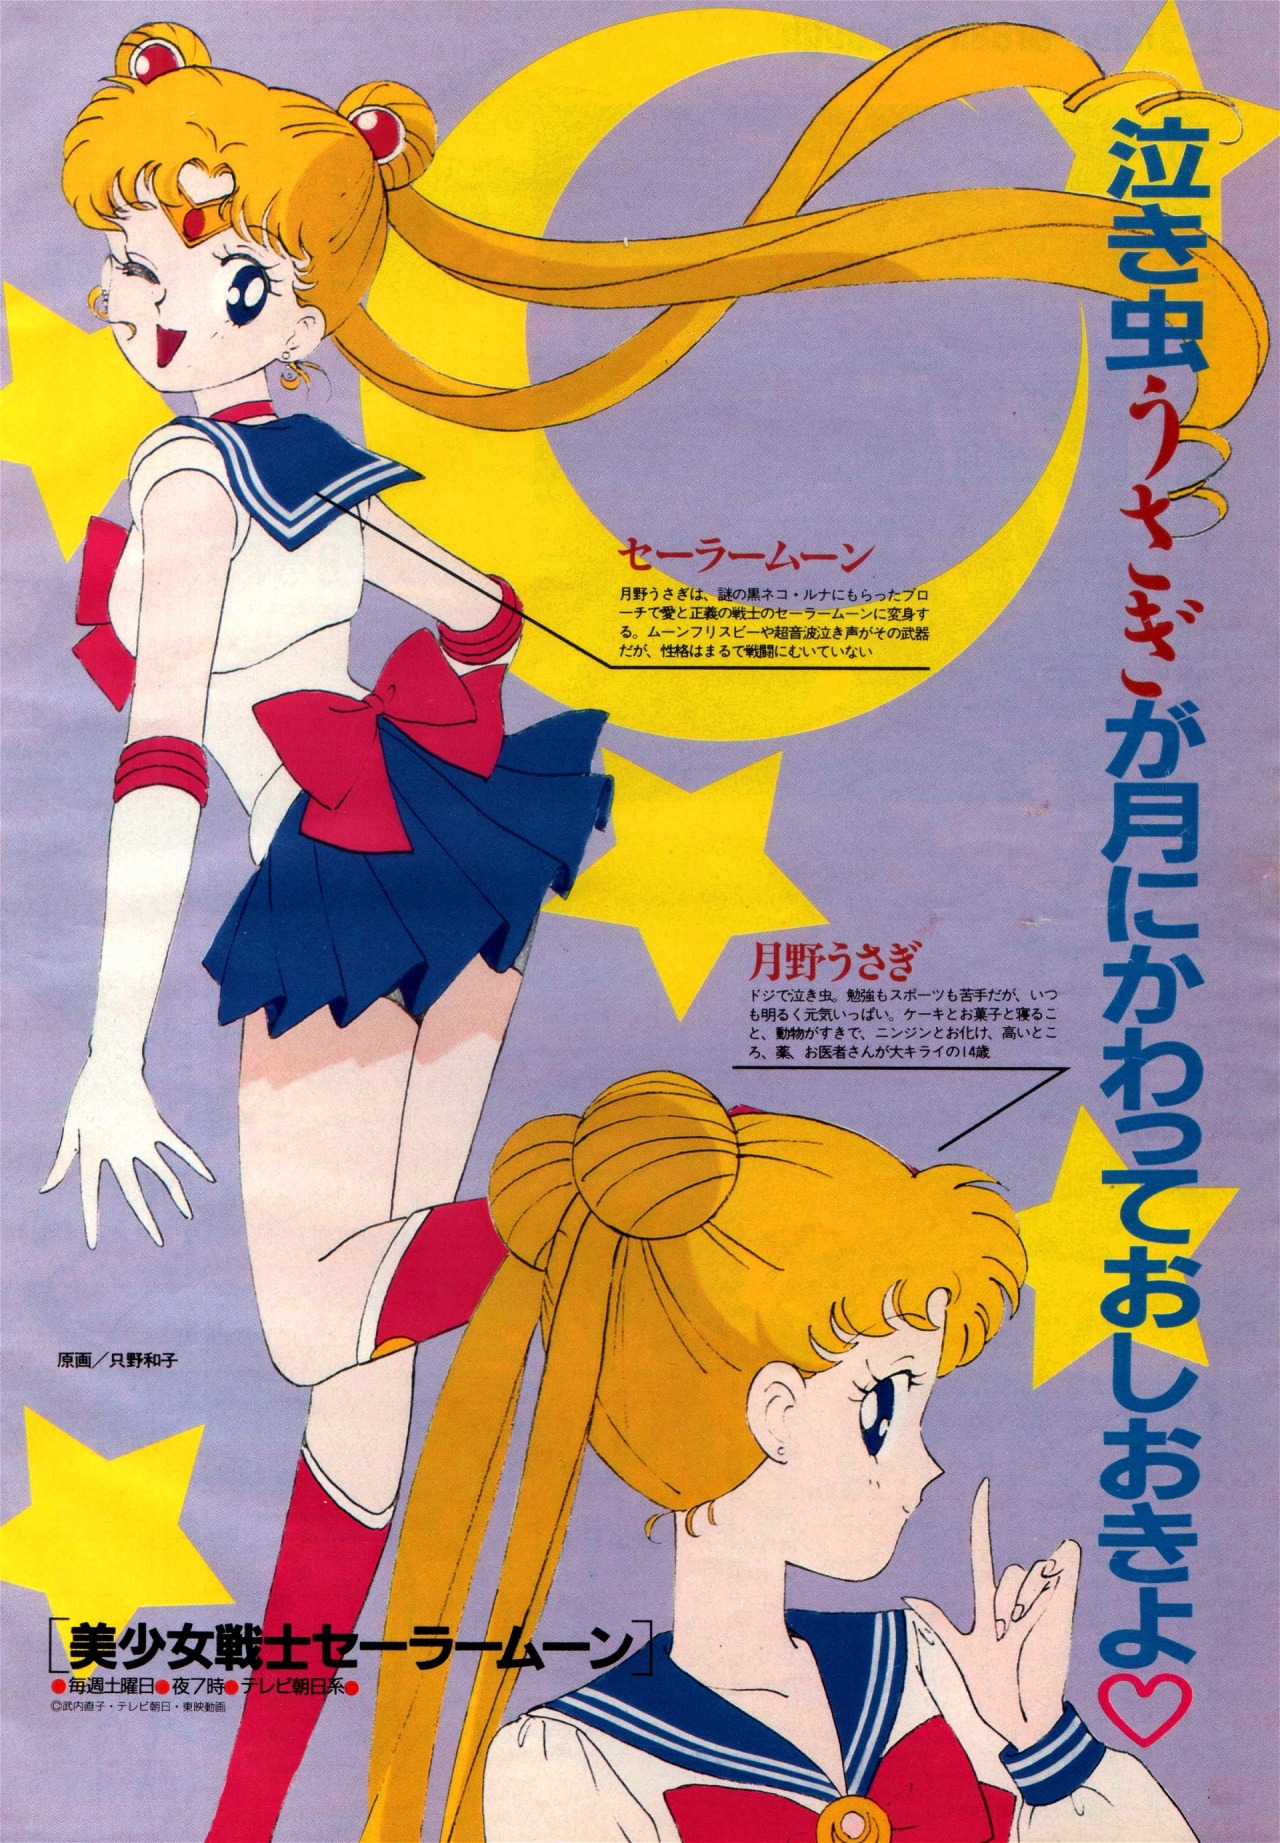 KAZUKO TADANO Illustration FAVORITE Art Works Book Dancouga Sailor Moon MV 